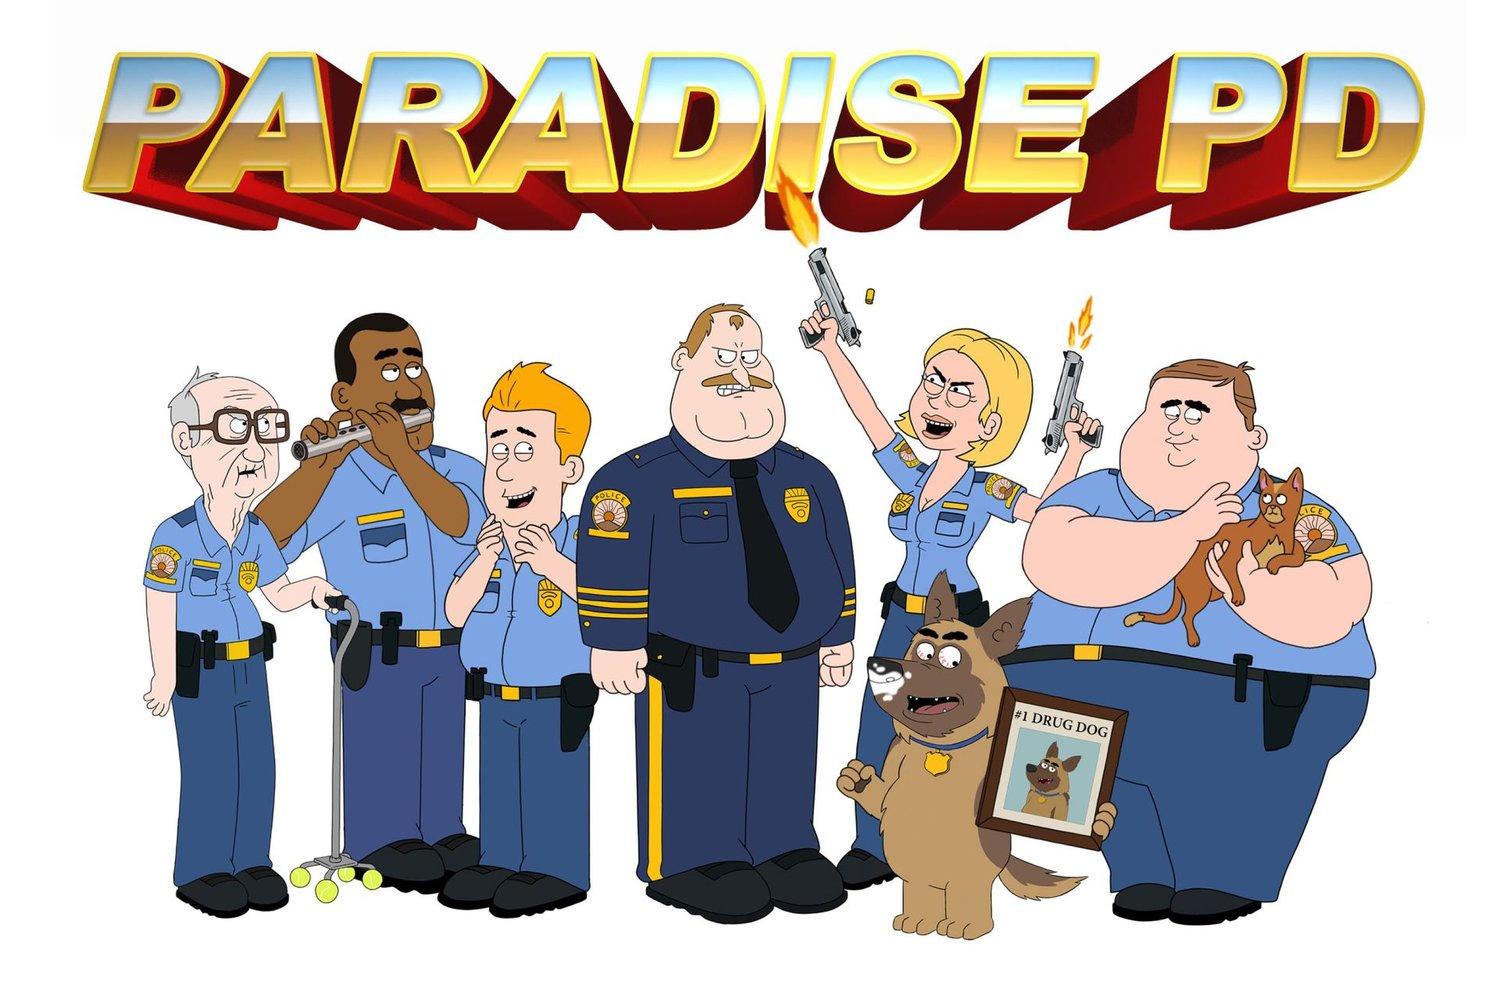 اداره پلیس پارادایس (Paradise pd)